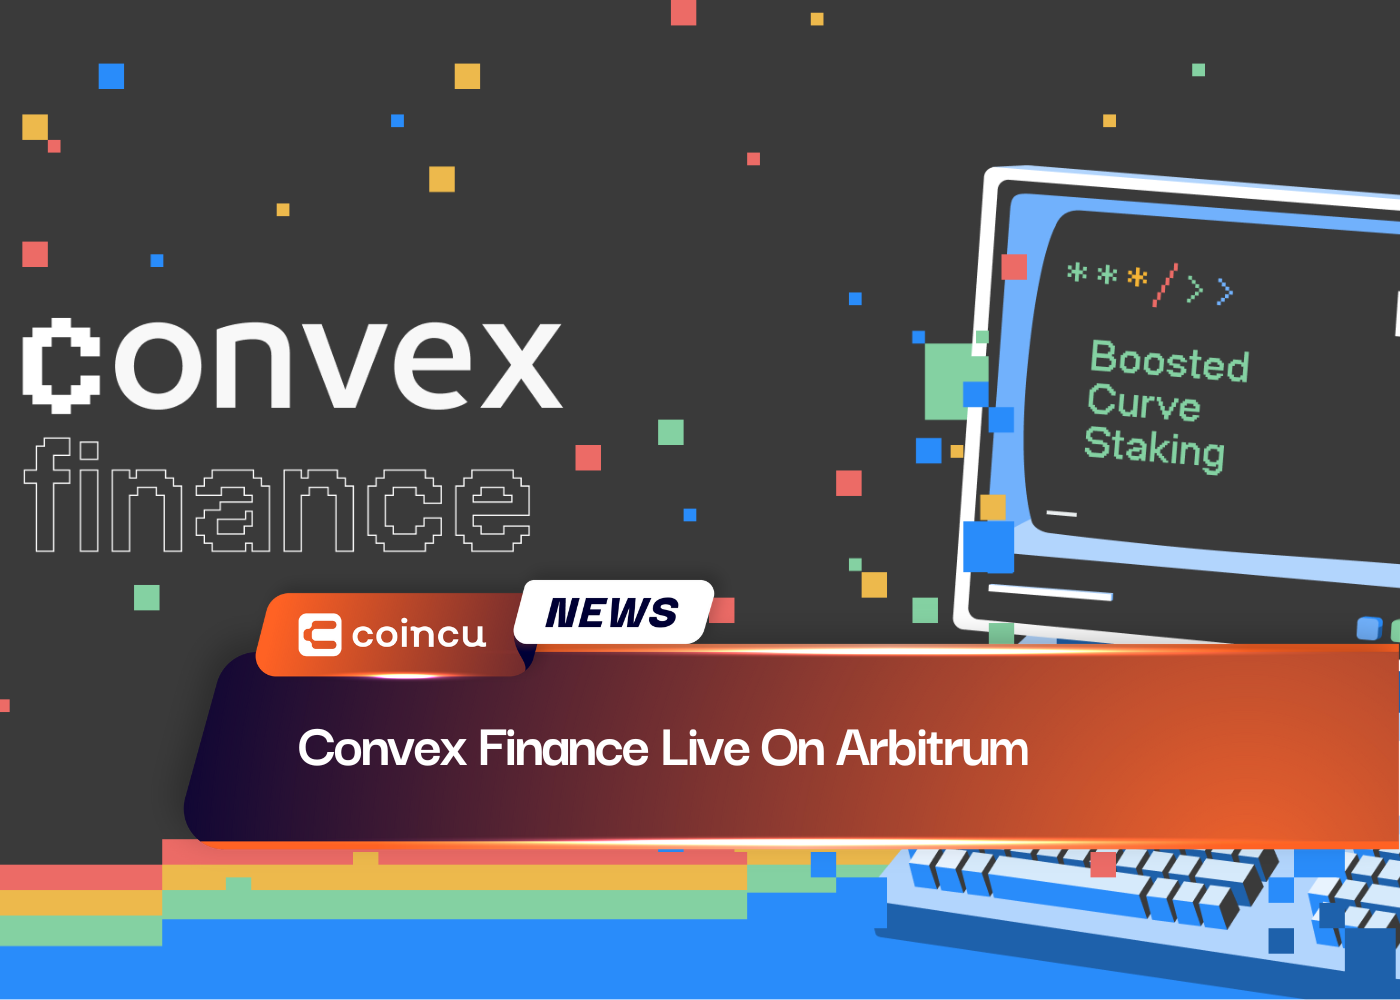 Convex Finance Live On Arbitrum